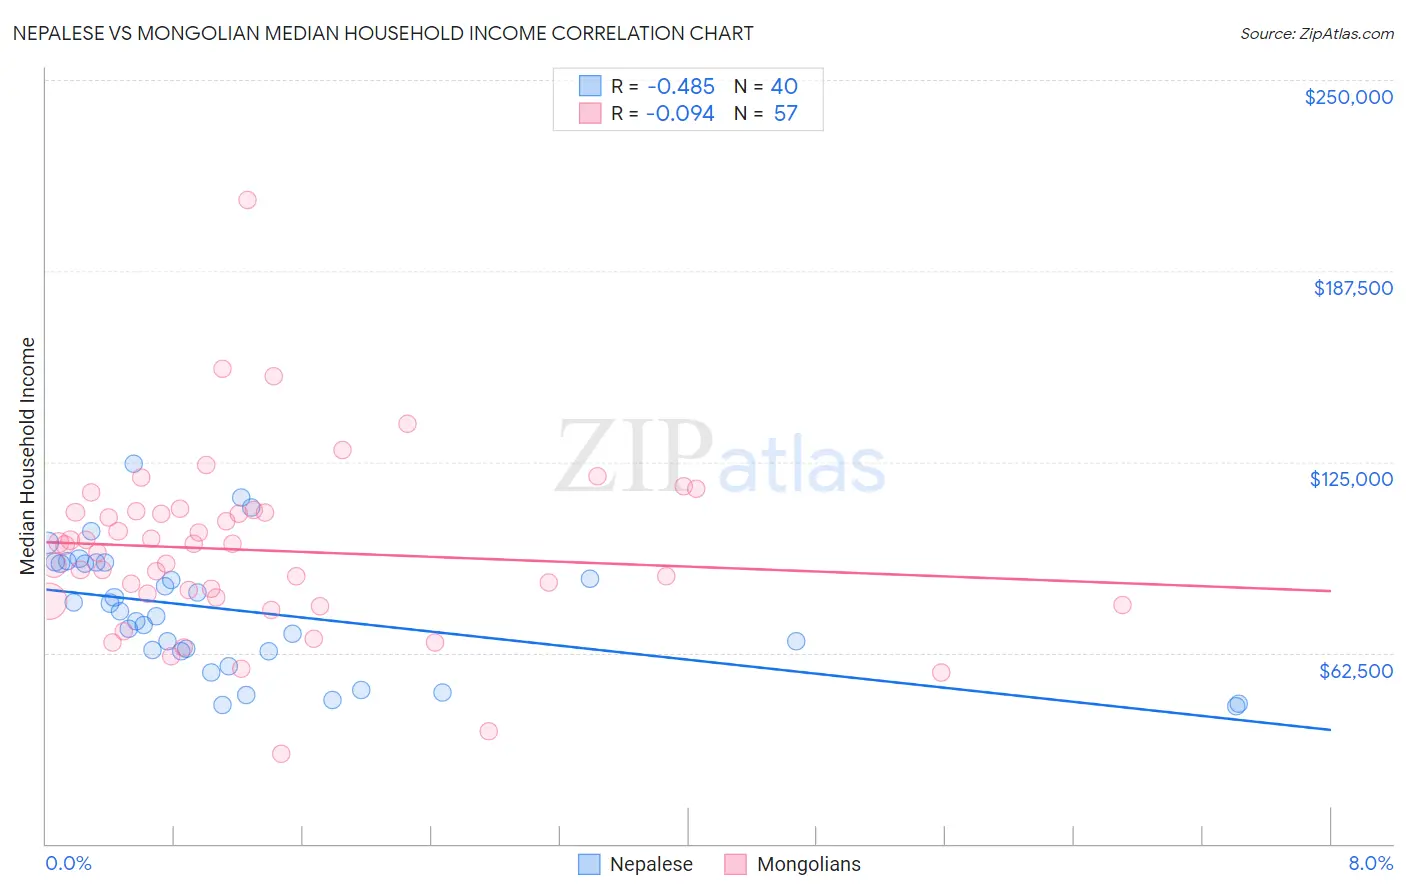 Nepalese vs Mongolian Median Household Income